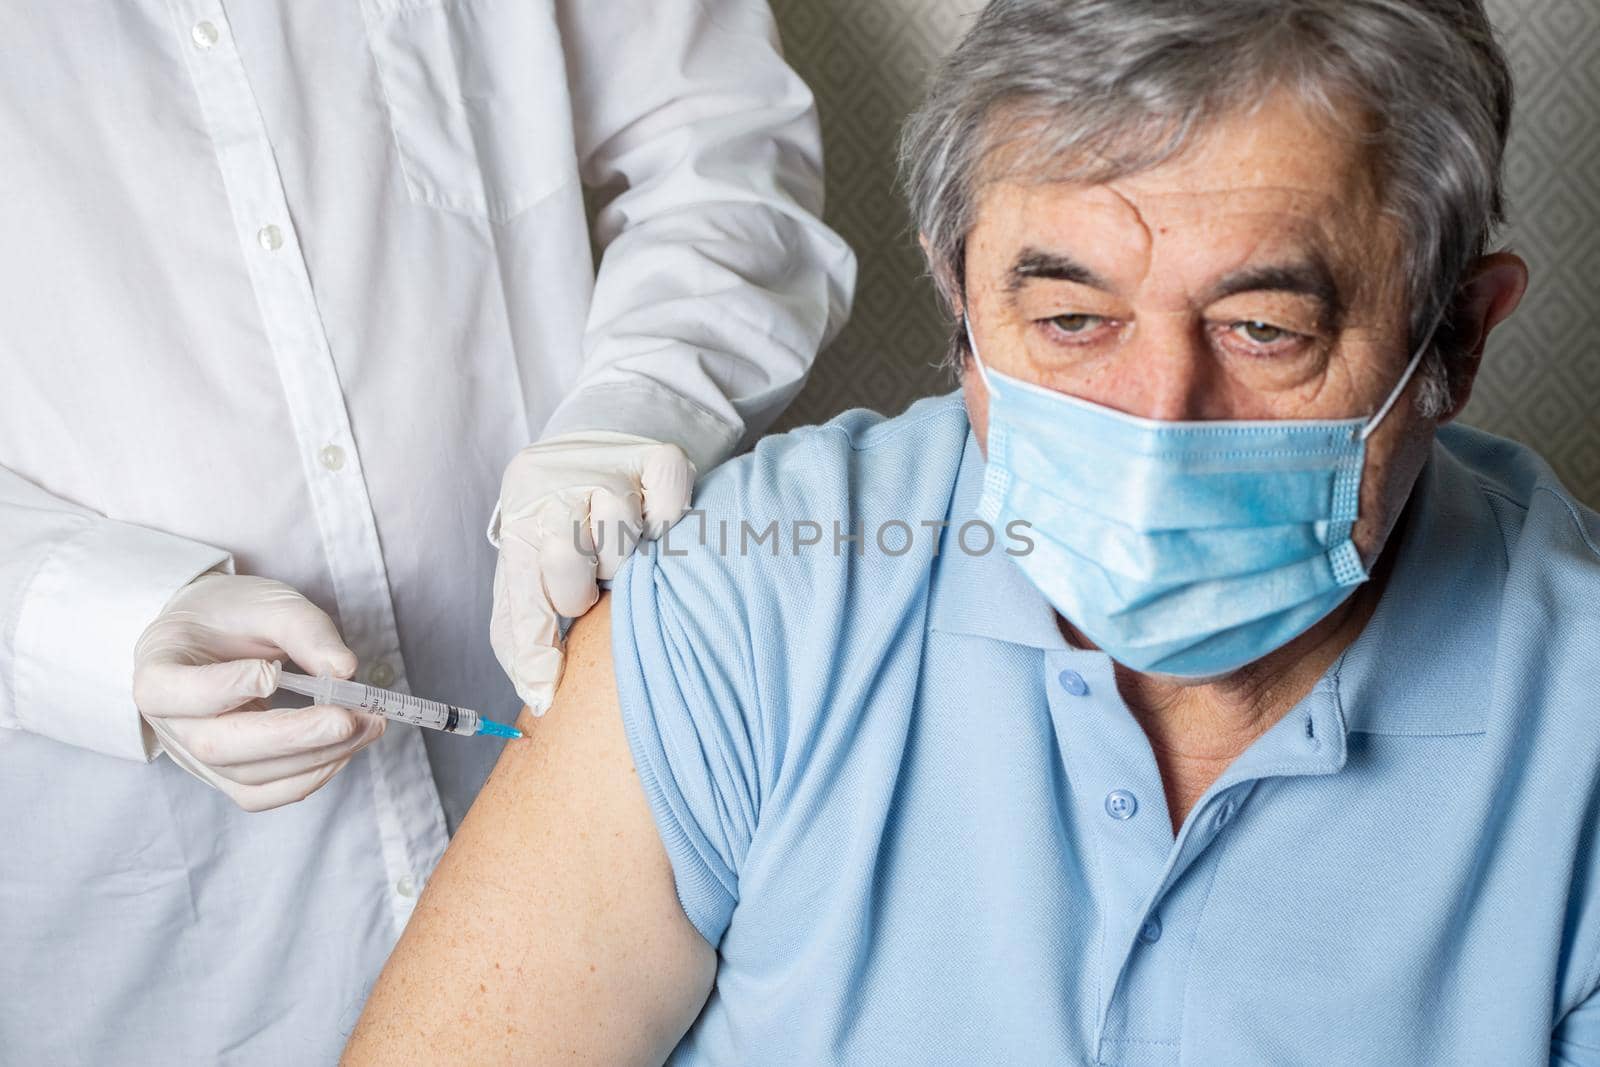 Senior elderly man being vaccinated against coronavirus by a male doctor. General practitioner vaccinating an elderly patient against flu, influenza, pneumonia or coronavirus.